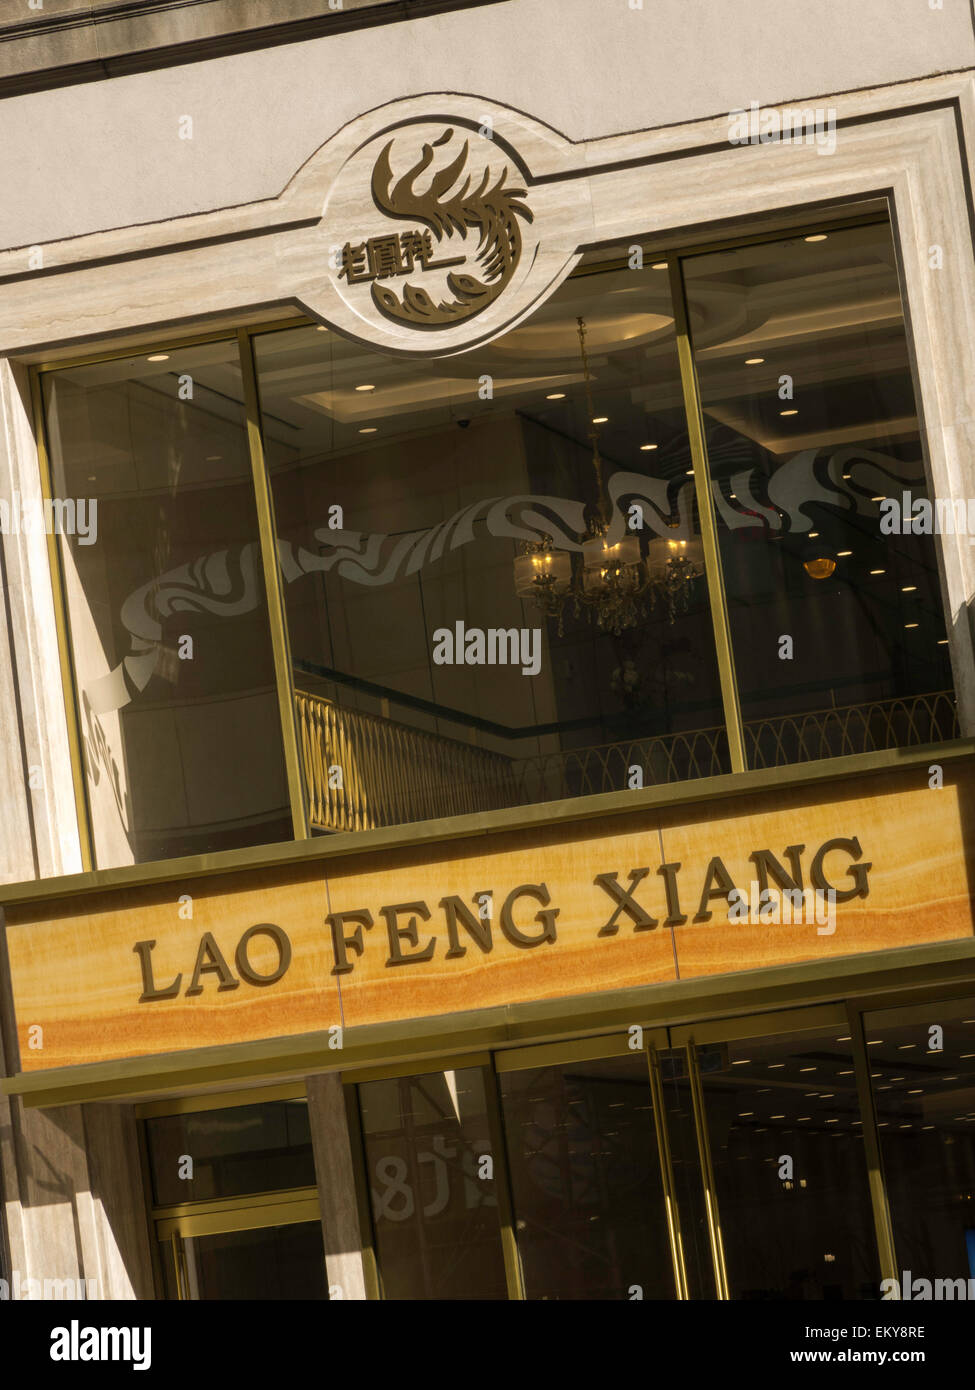 Lao Feng Xiang Juwelier Fassade, NYC, USA Stockfoto